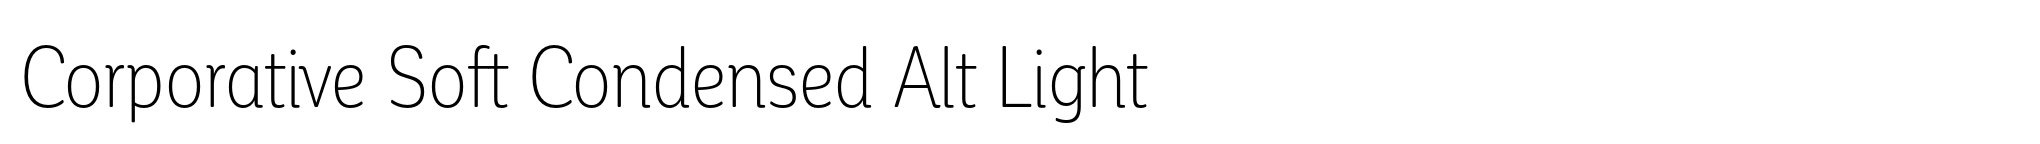 Corporative Soft Condensed Alt Light image